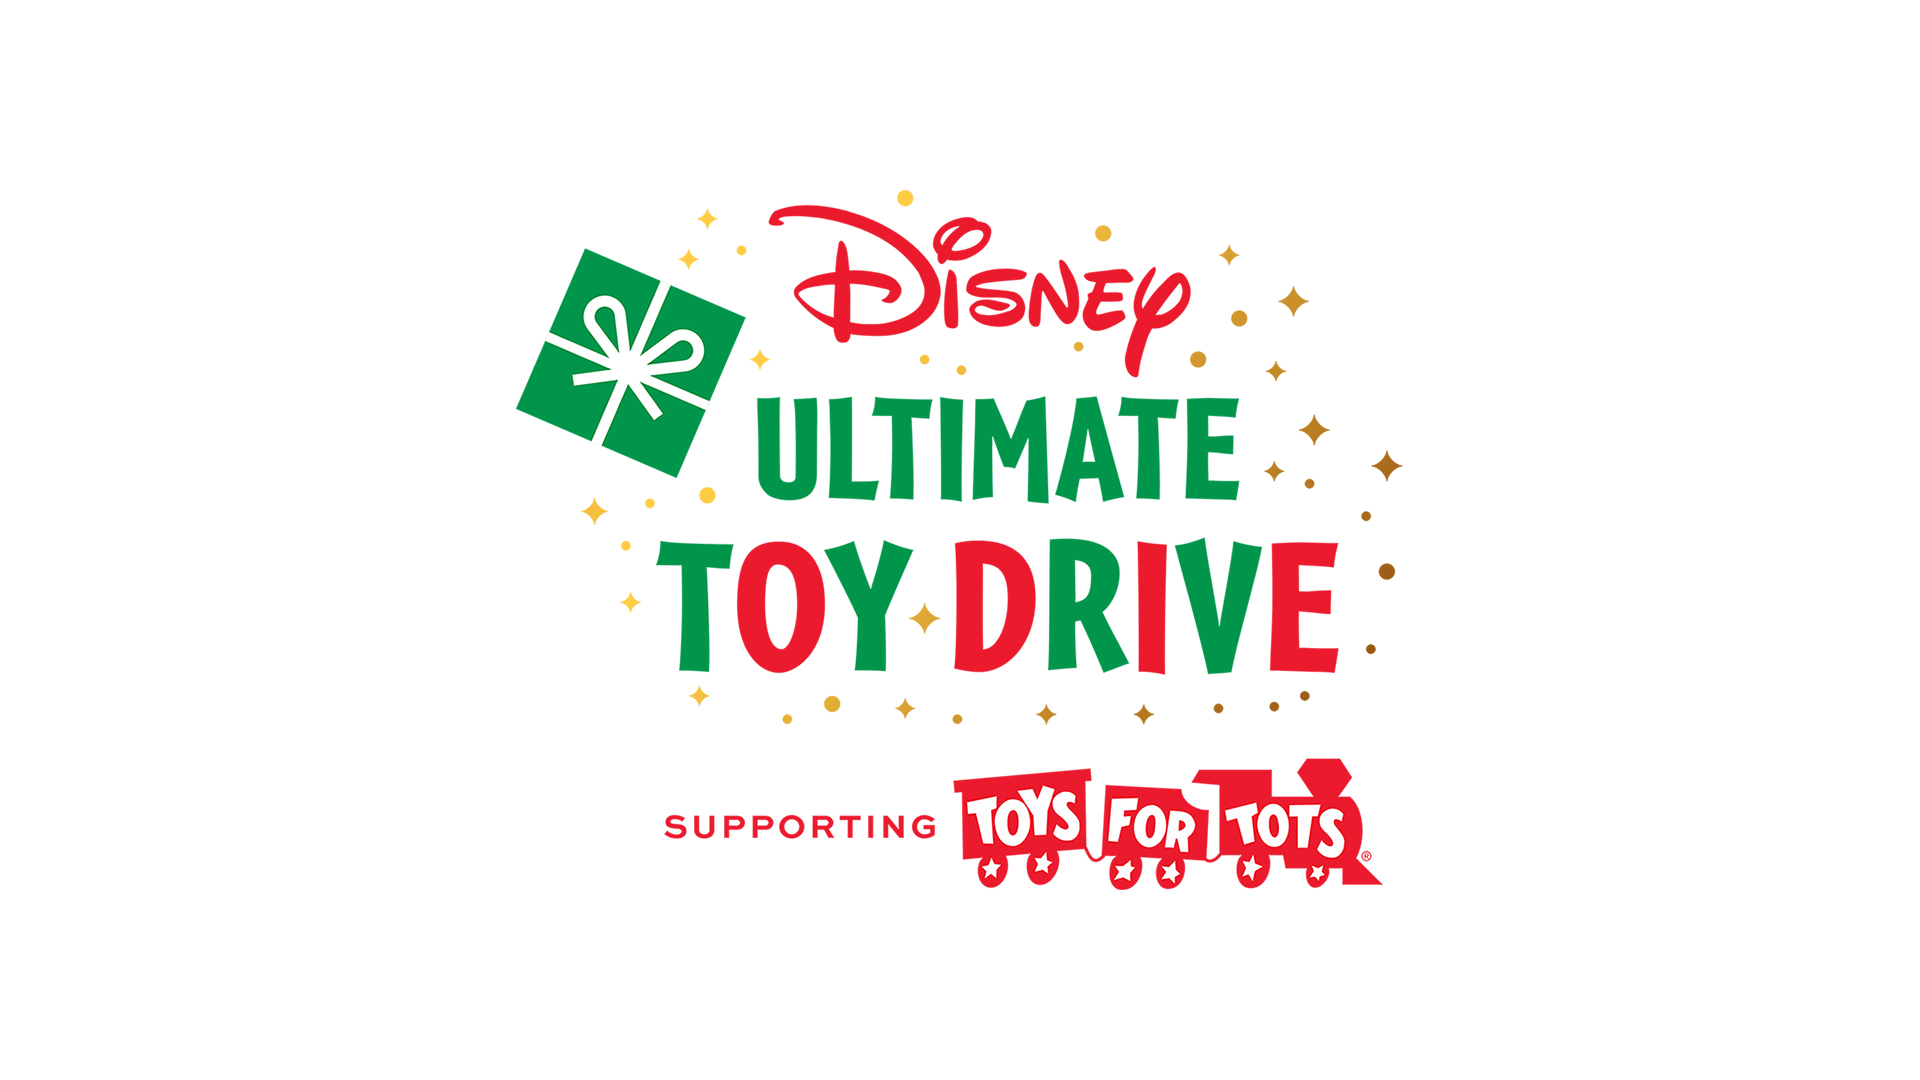 Disney Ultimate Toy Drive Delivers Joy